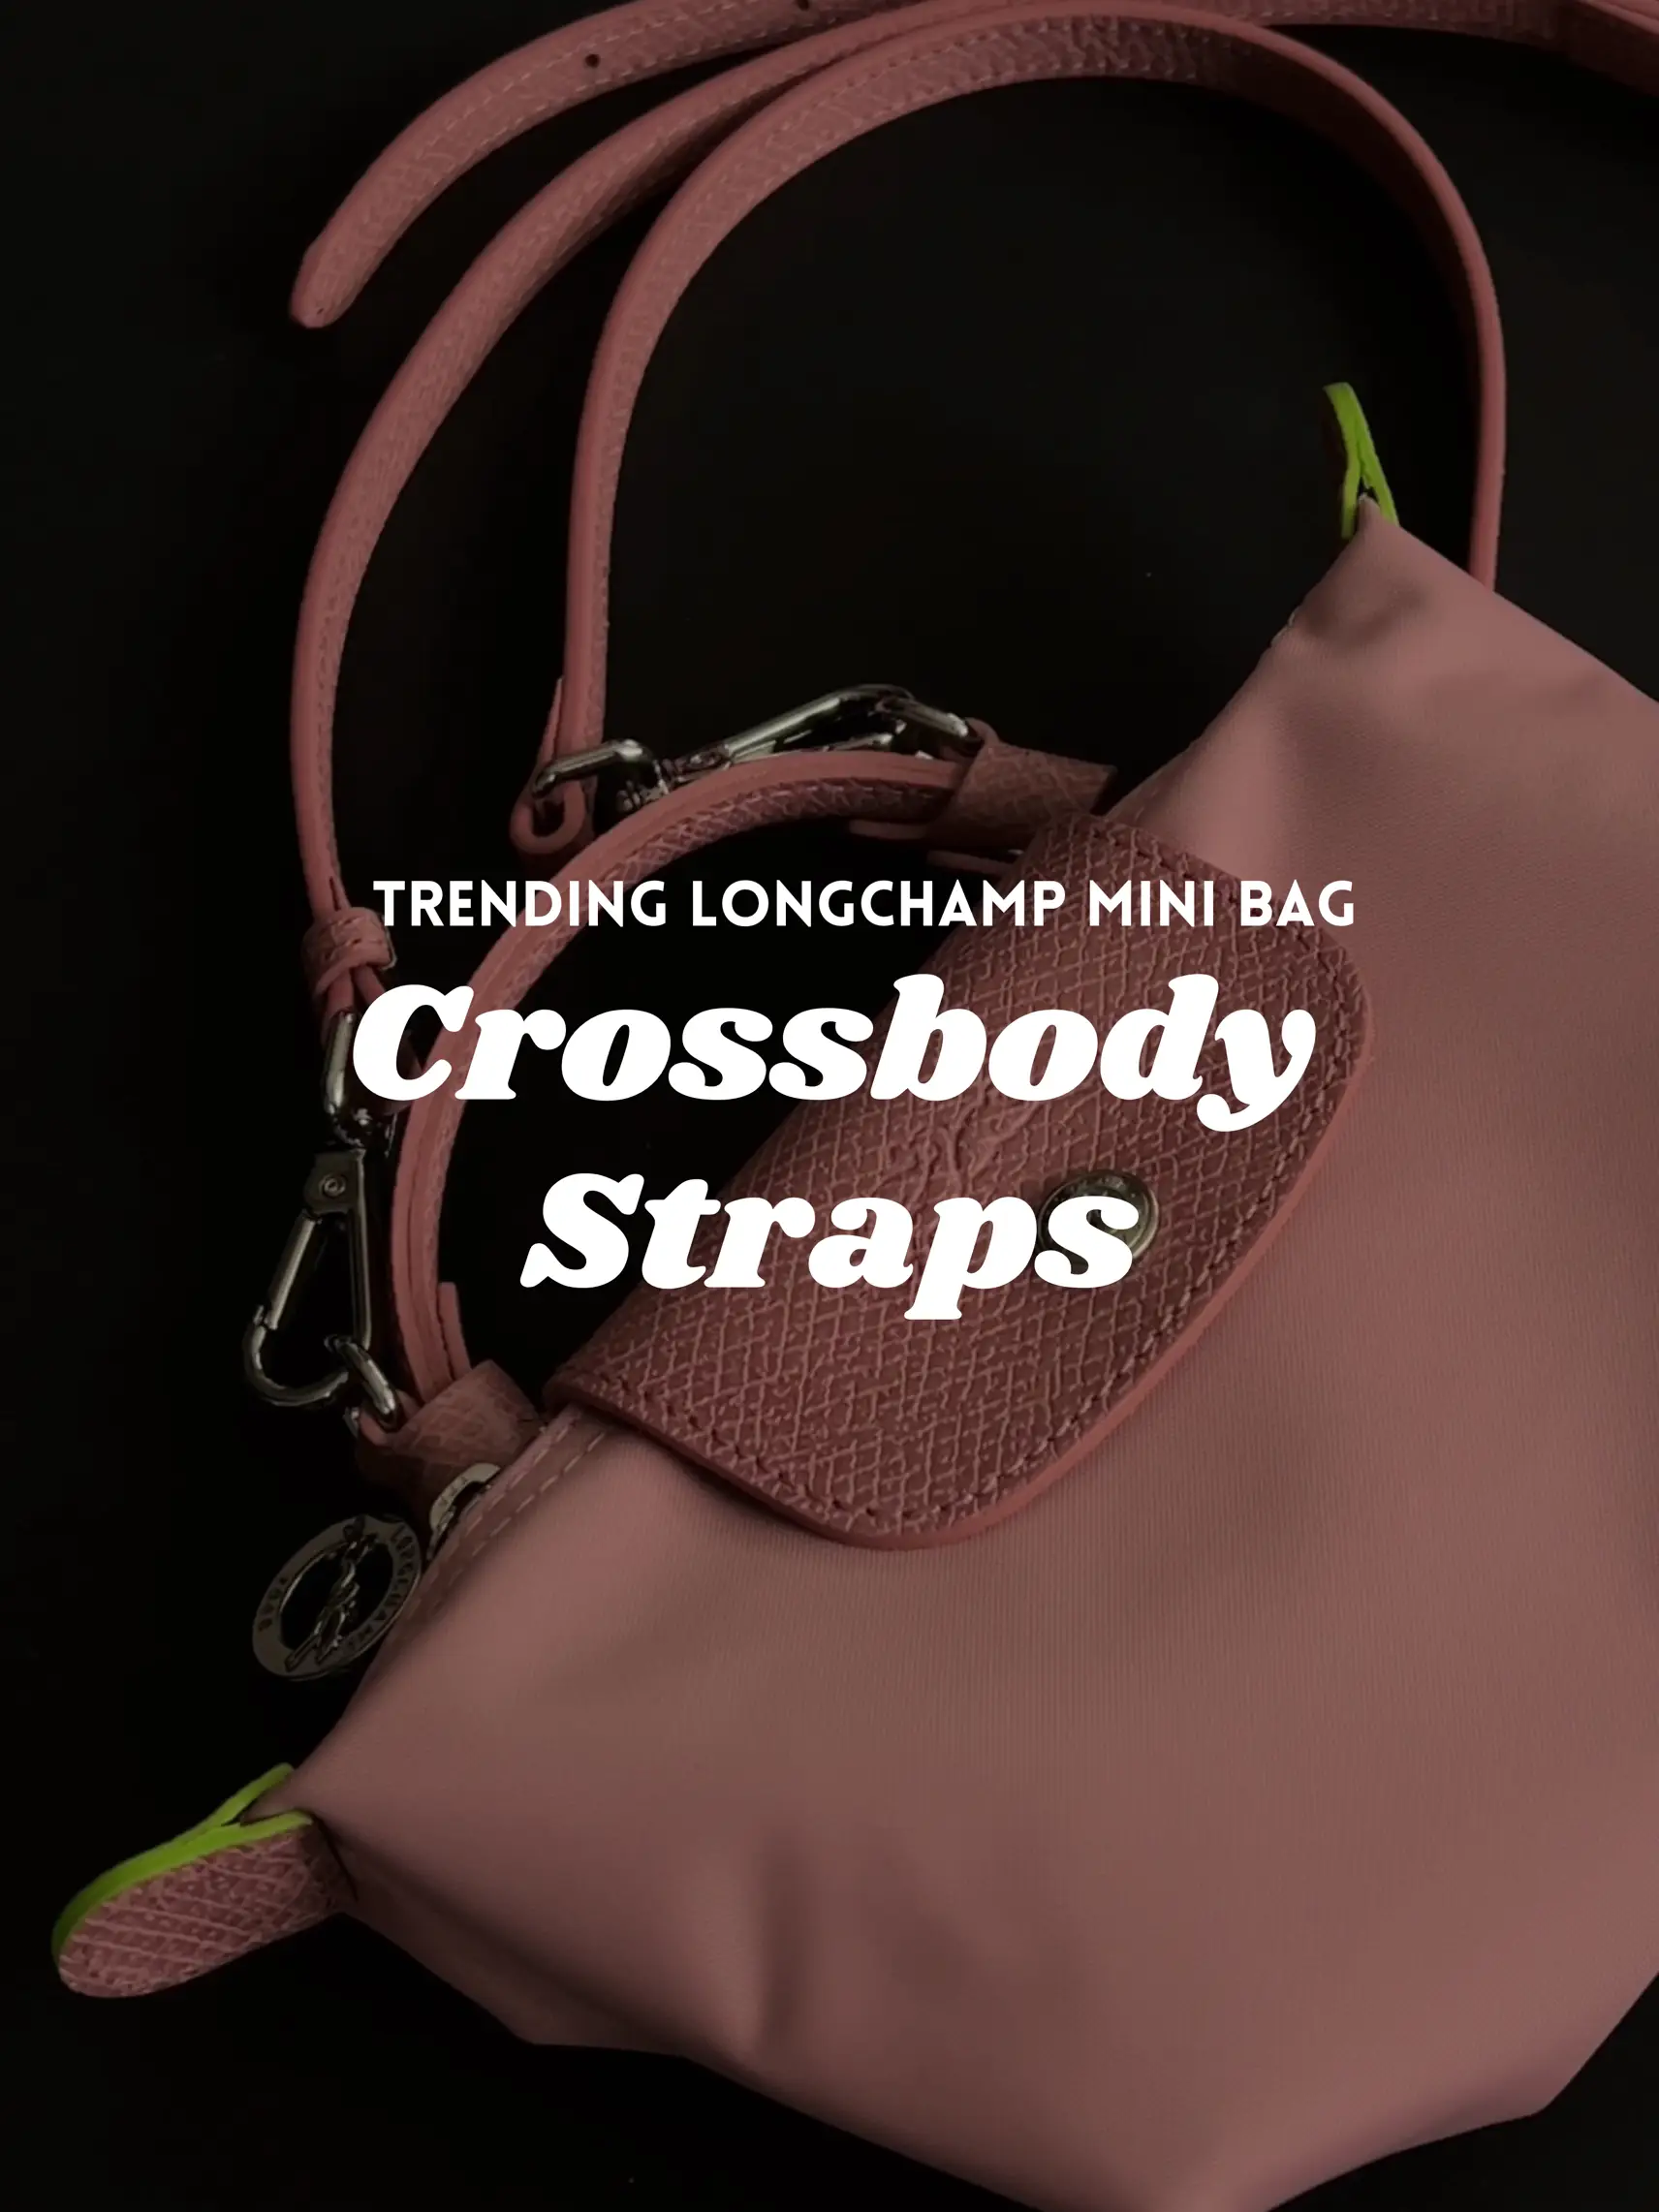 Turning my Longchamp mini pouch into a crossbody 🎀